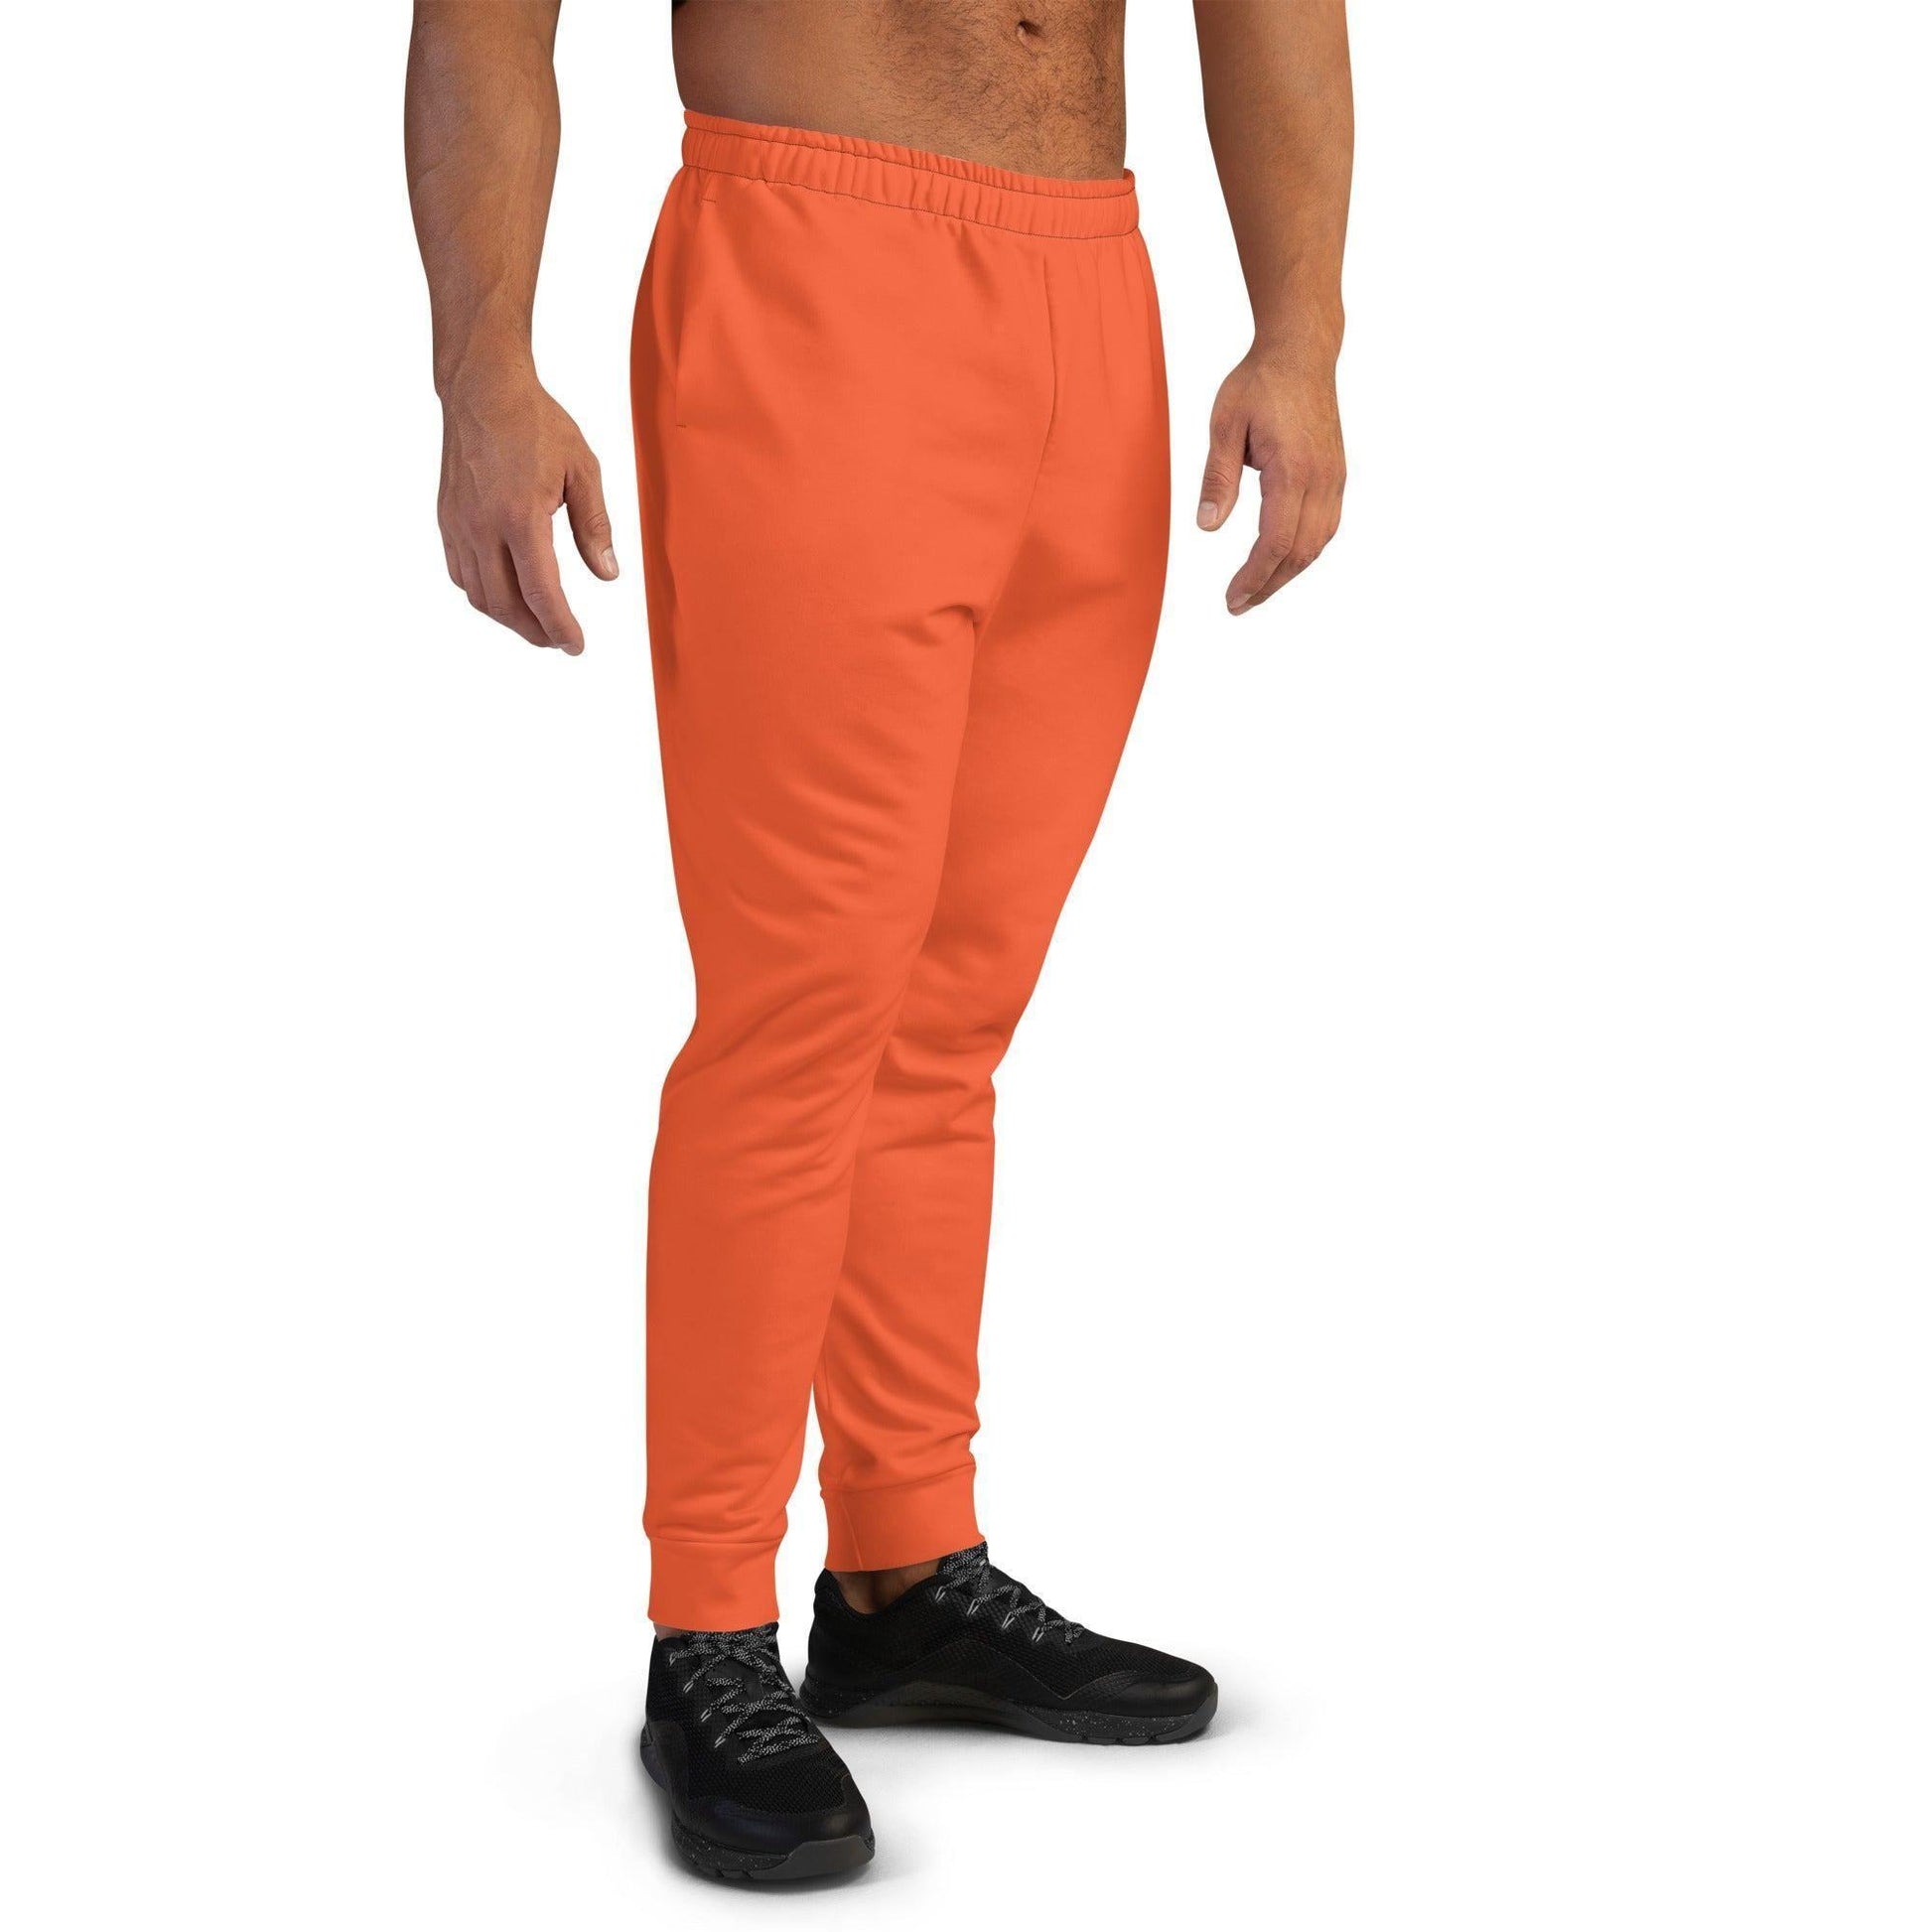 Outrageous Orange Herren Jogginghose -- Outrageous Orange Herren Jogginghose - undefined Jogginghose | JLR Design